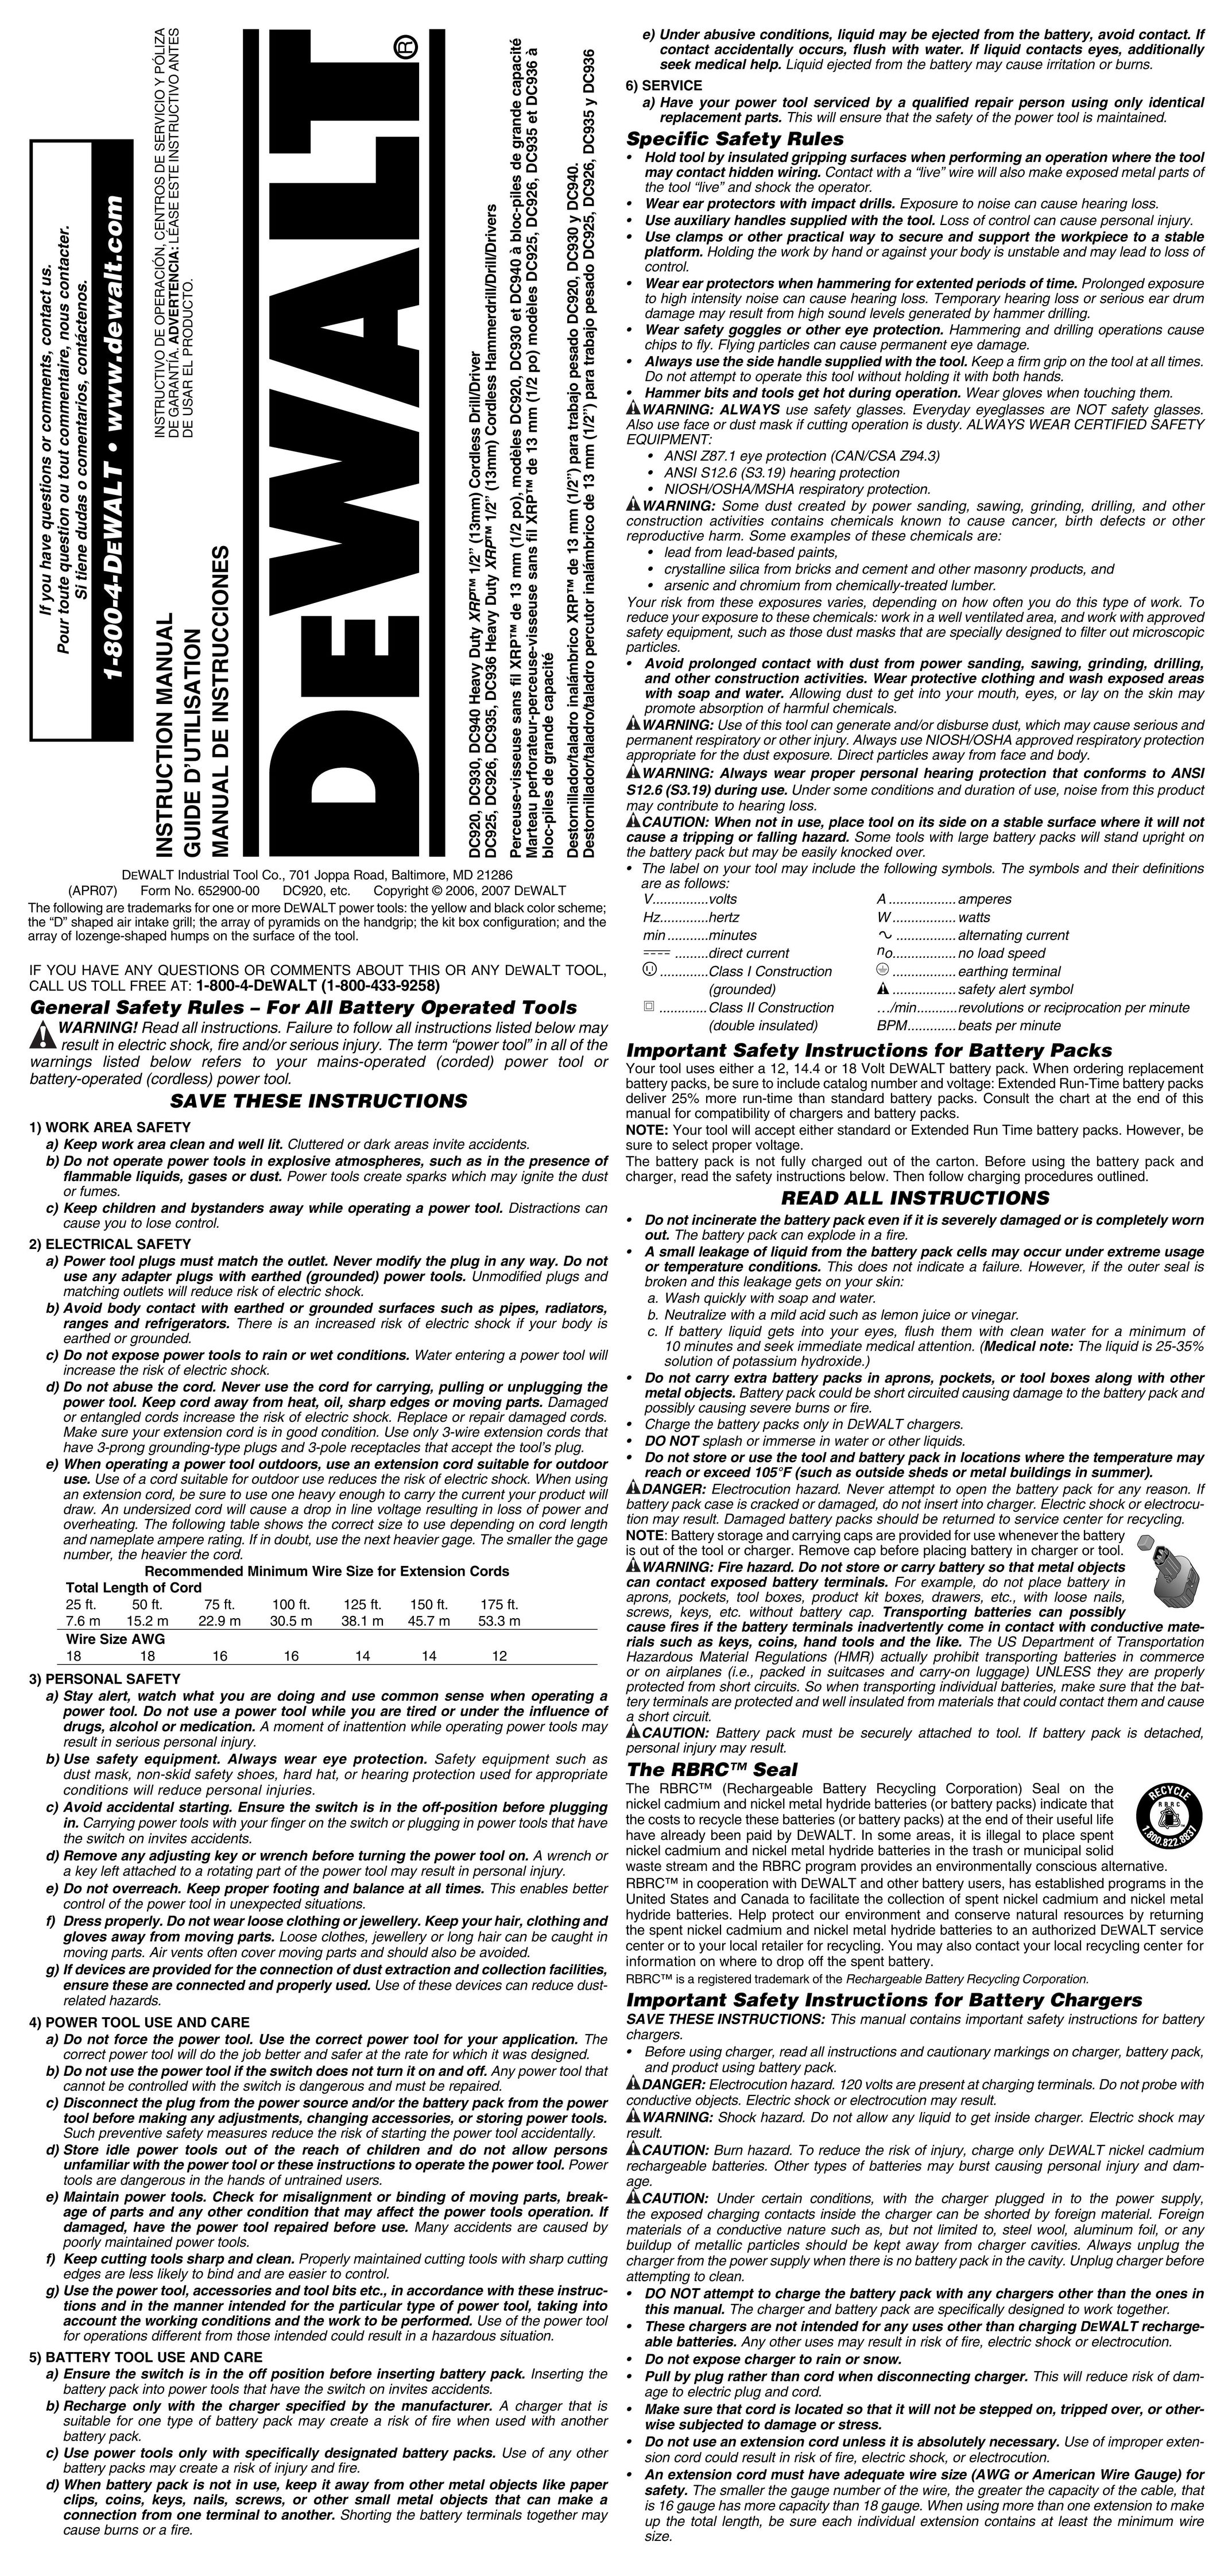 DeWalt DC936 Cordless Drill User Manual